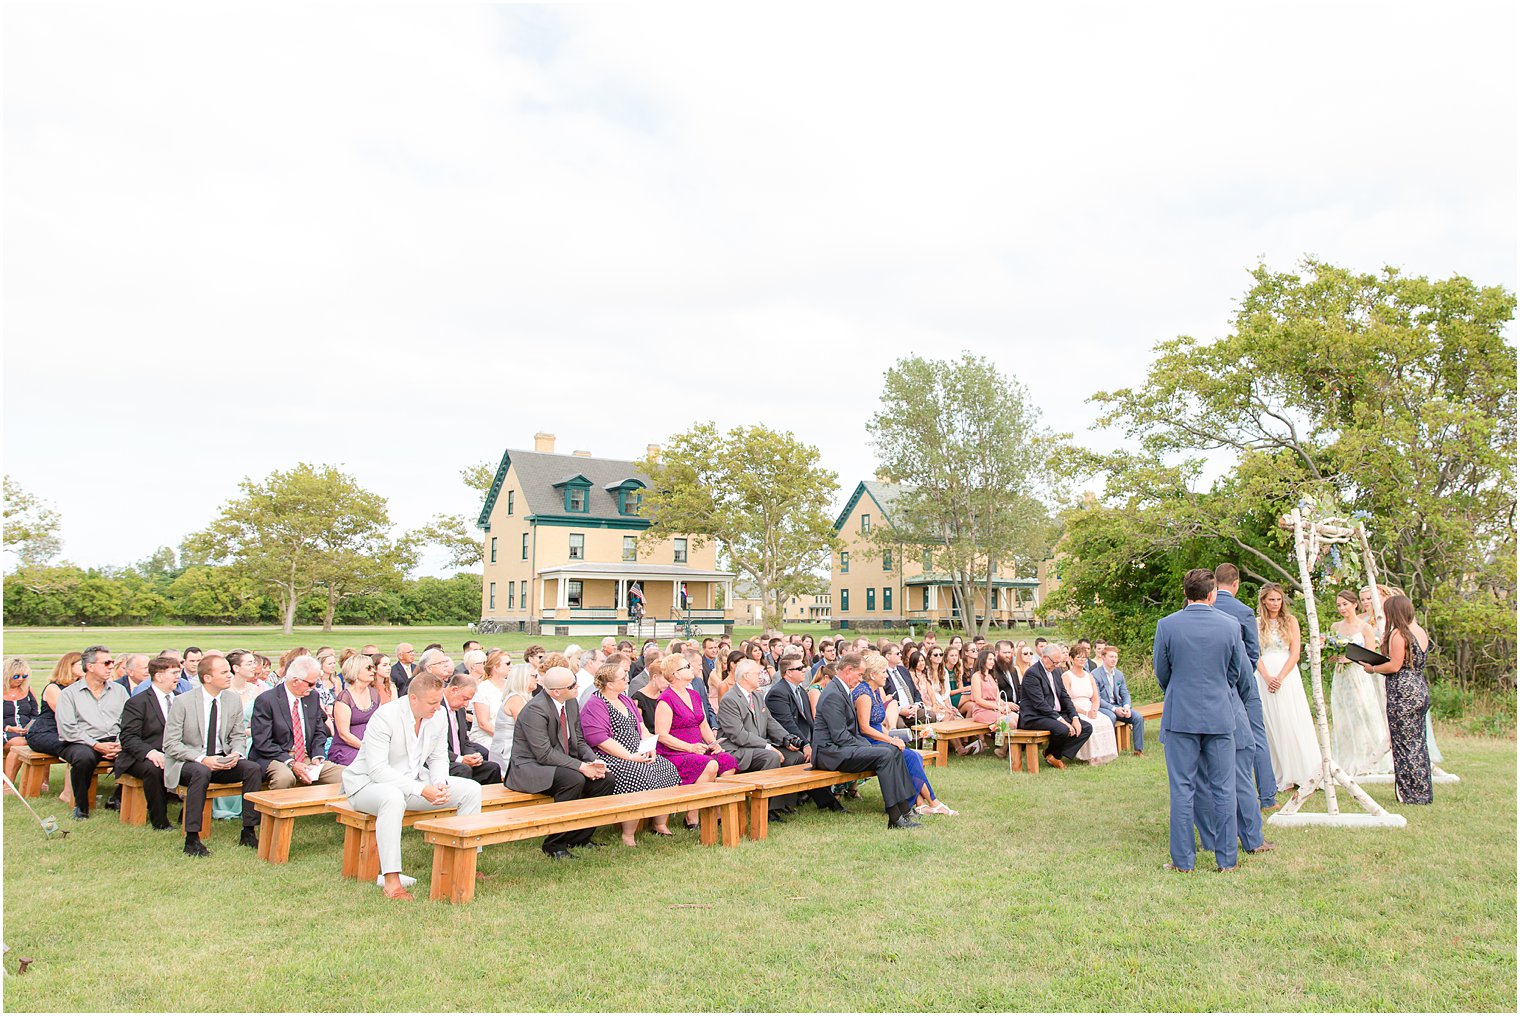 Outdoor ceremony at Sandy Hook Chapel in Atlantic Highlands, NJ